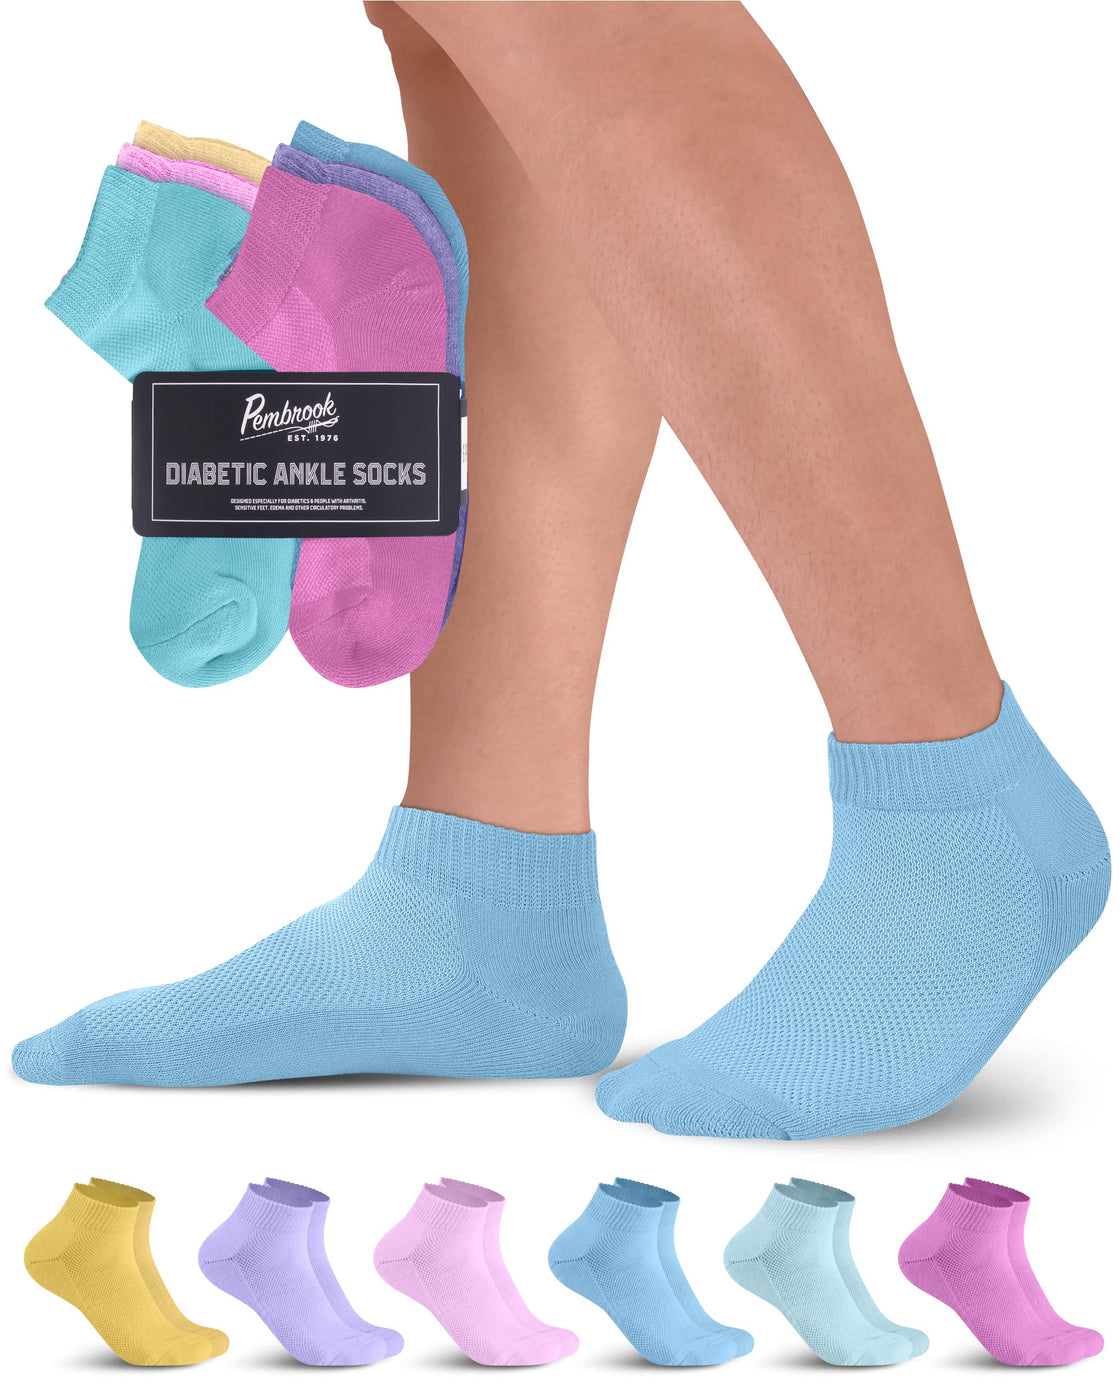 Pembrook Diabetic Ankle Socks For Men And Women 6 Pairs Low Cut Seam